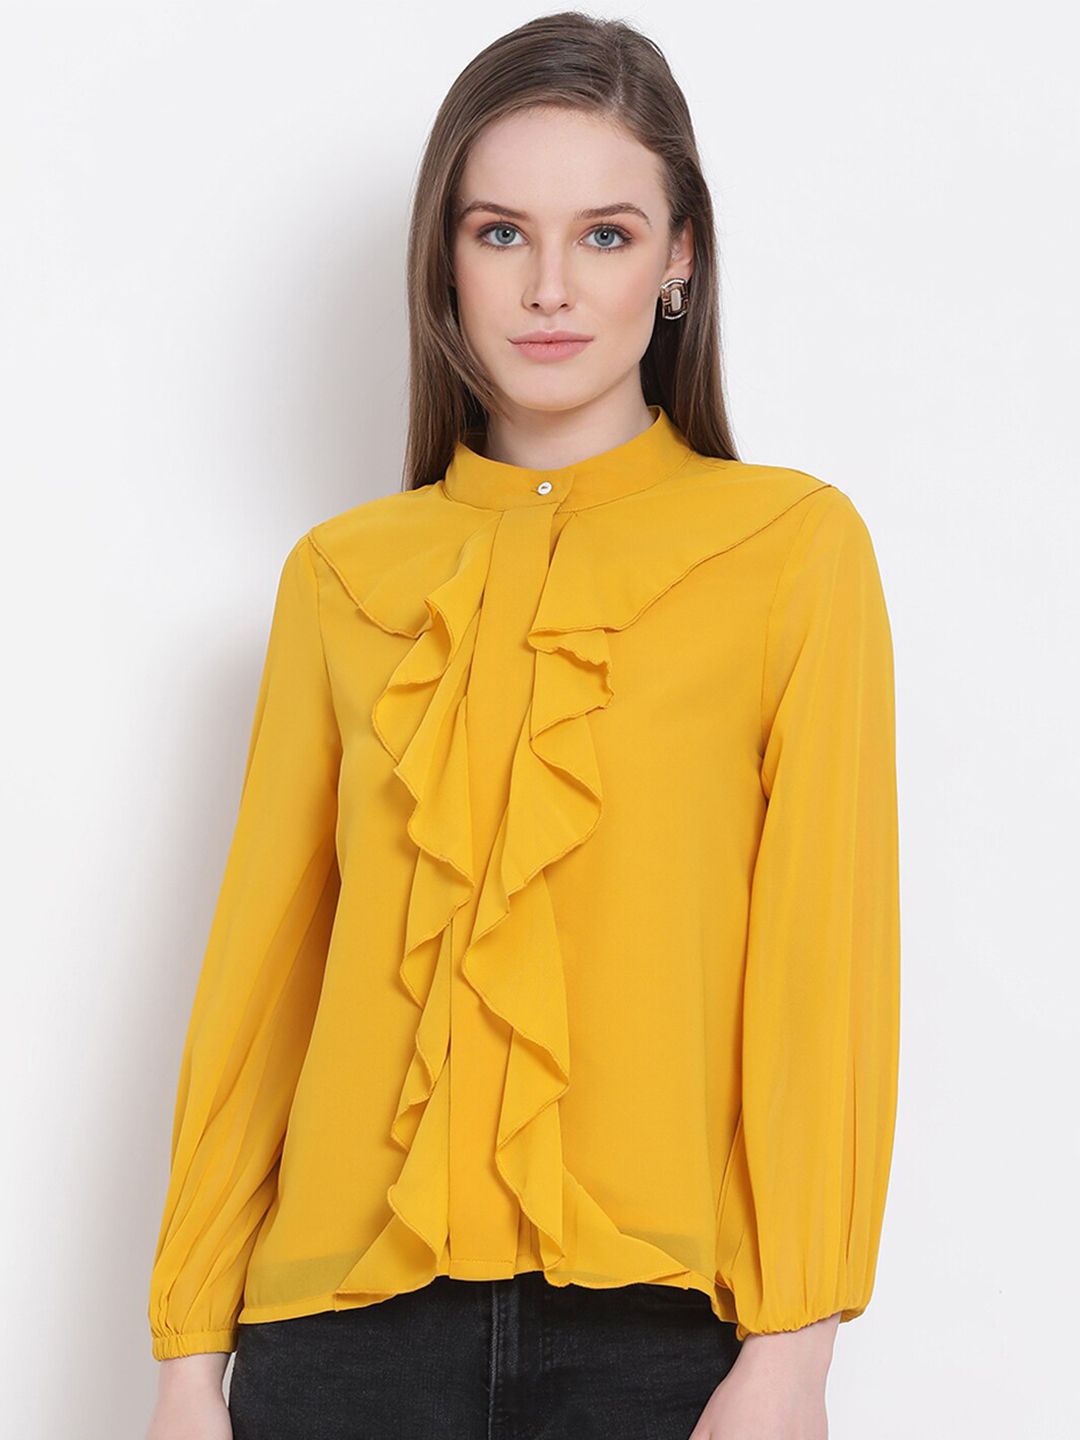 DRAAX Fashions Women Yellow Mandarin Collar Ruffles Georgette Shirt Style Top Price in India